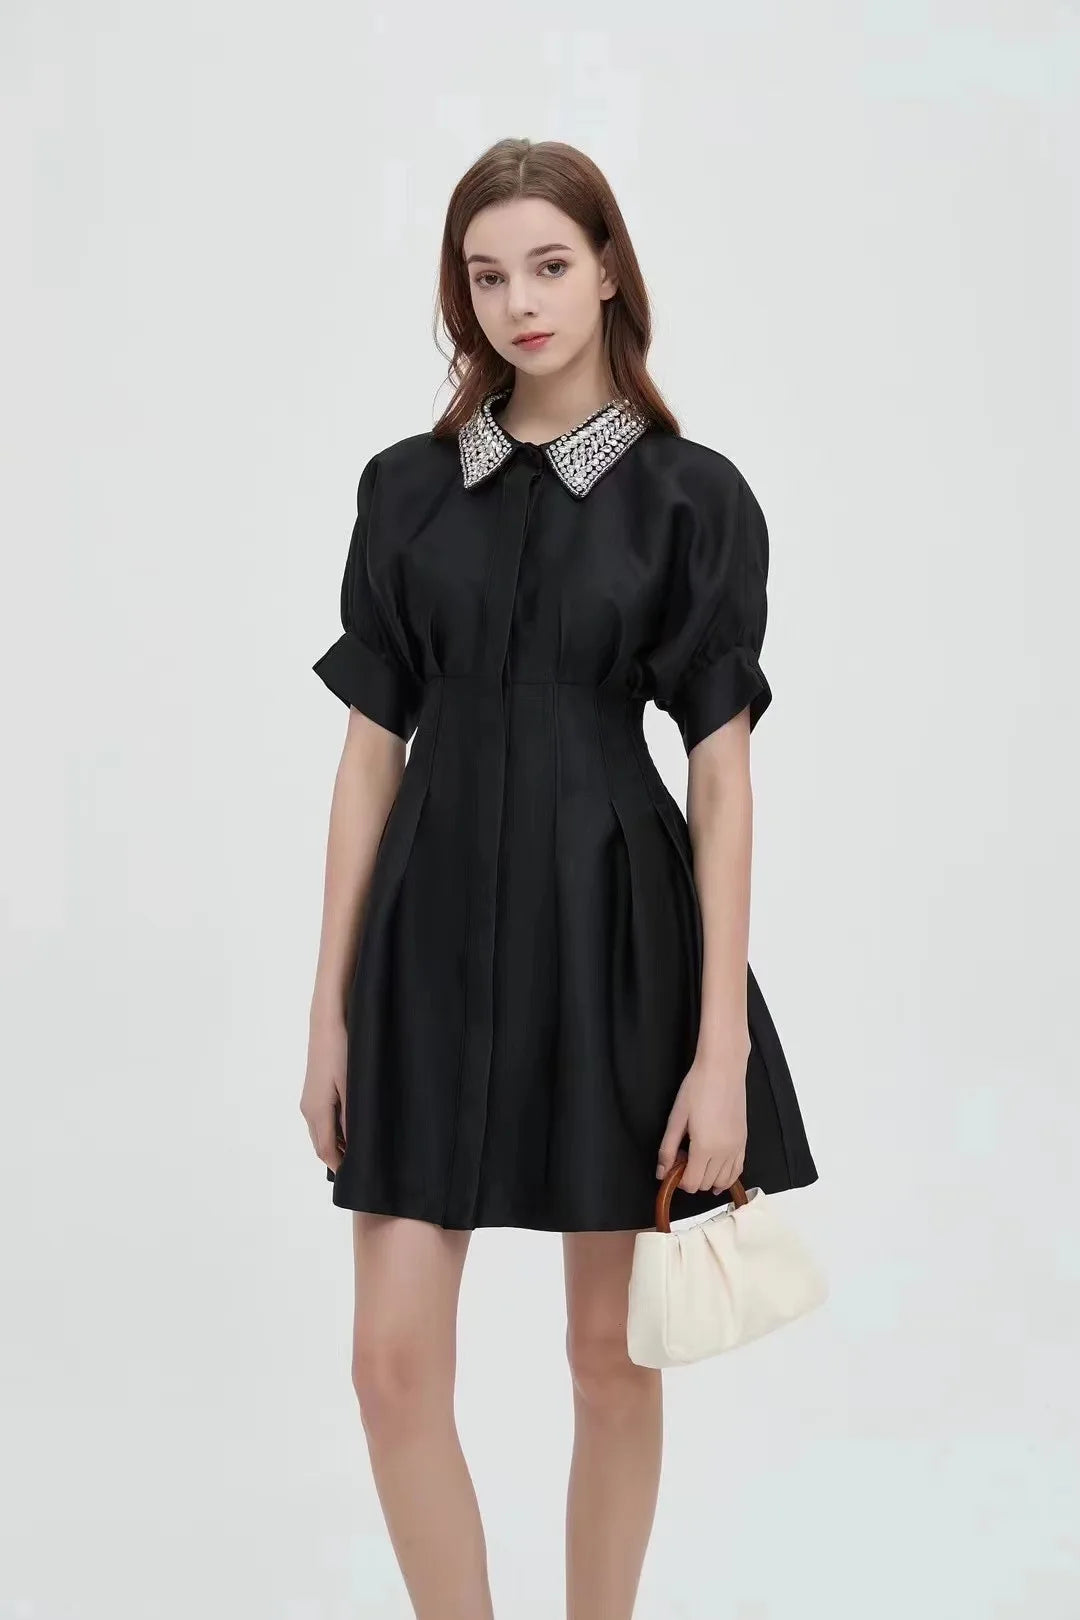 DRESS STYLE - SY625-short dress-onlinemarkat-Black-XS - US 2-onlinemarkat